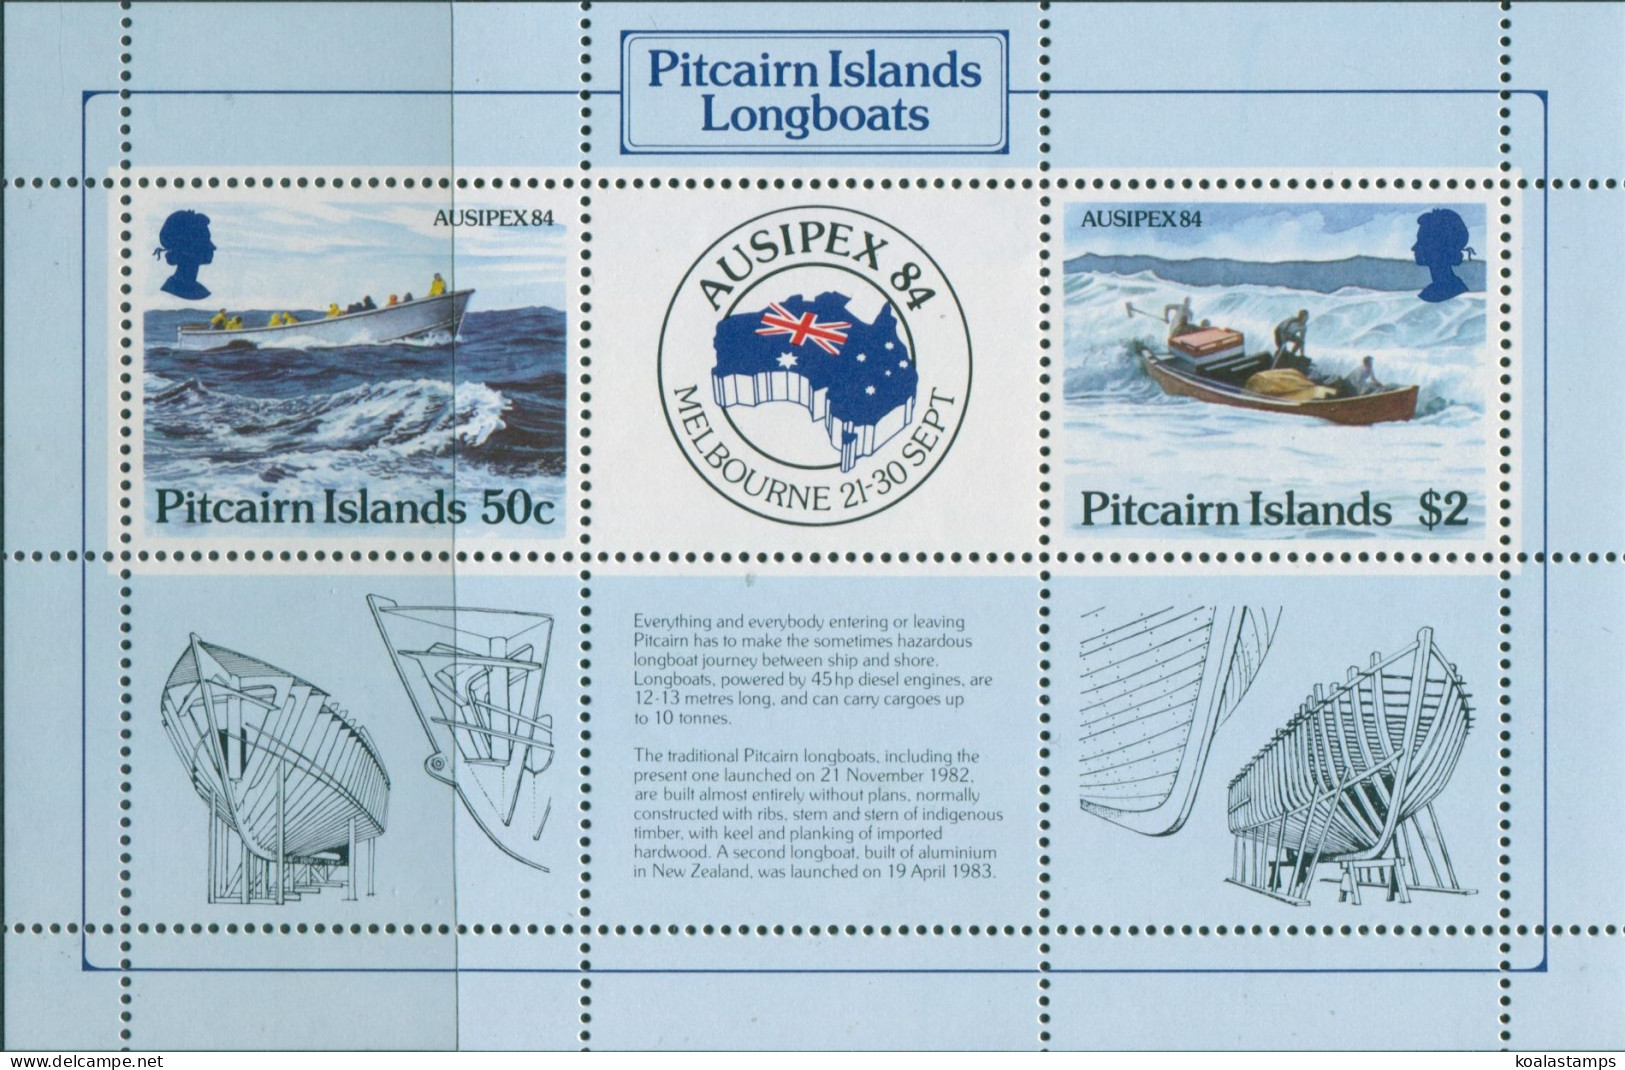 Pitcairn Islands 1984 SG263 Ausipex Longboats MS MNH - Pitcairn Islands